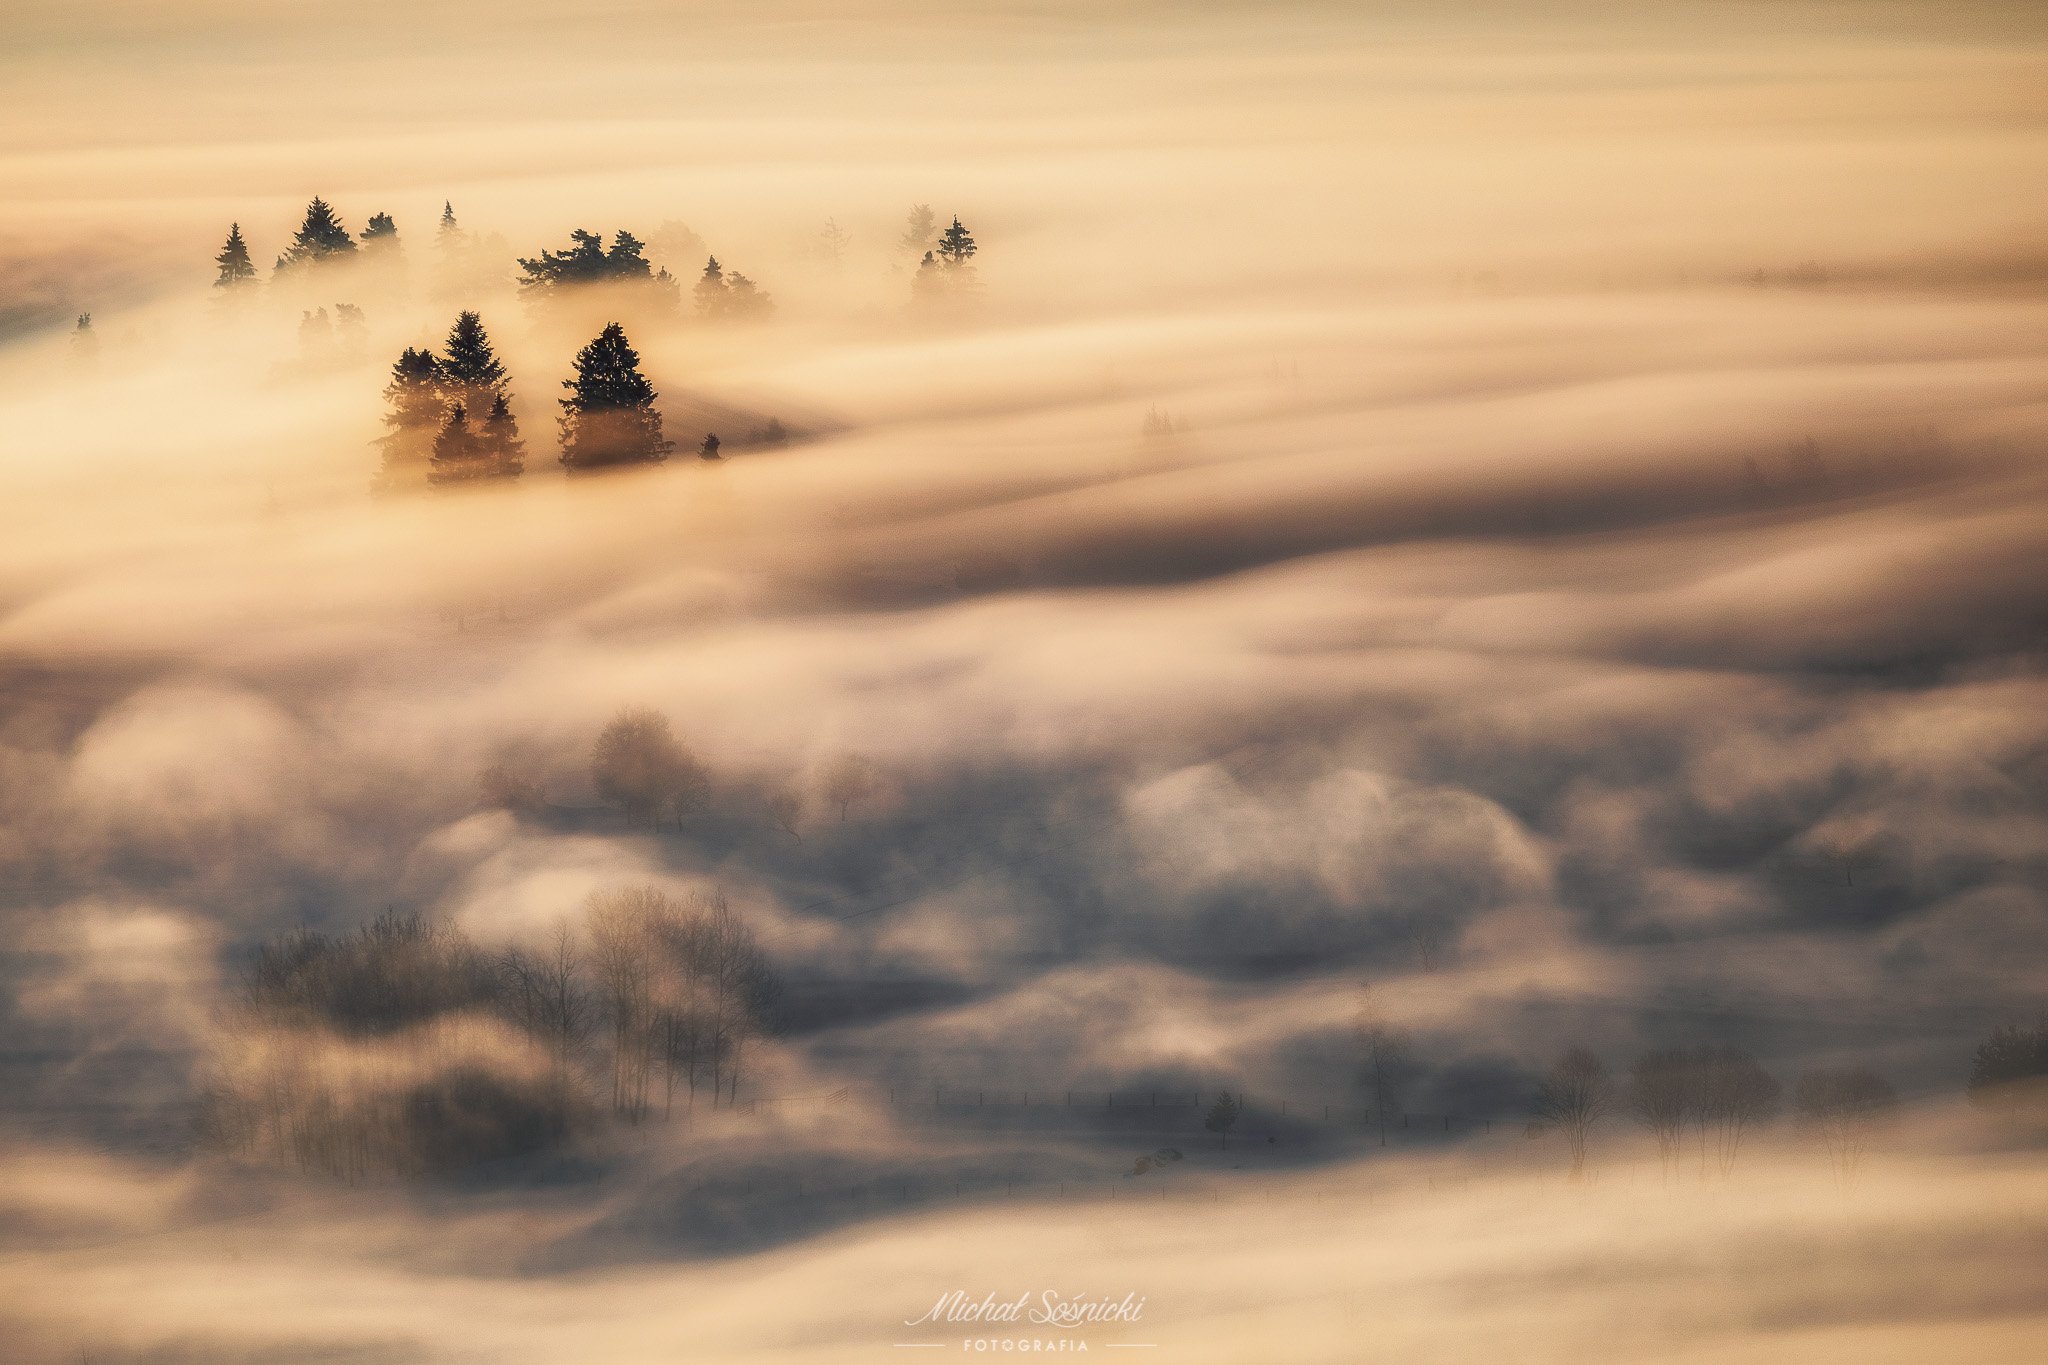 #fog #foggy #morning #day #poland #nature #amazing #benro #benq #pentax, Michał Sośnicki